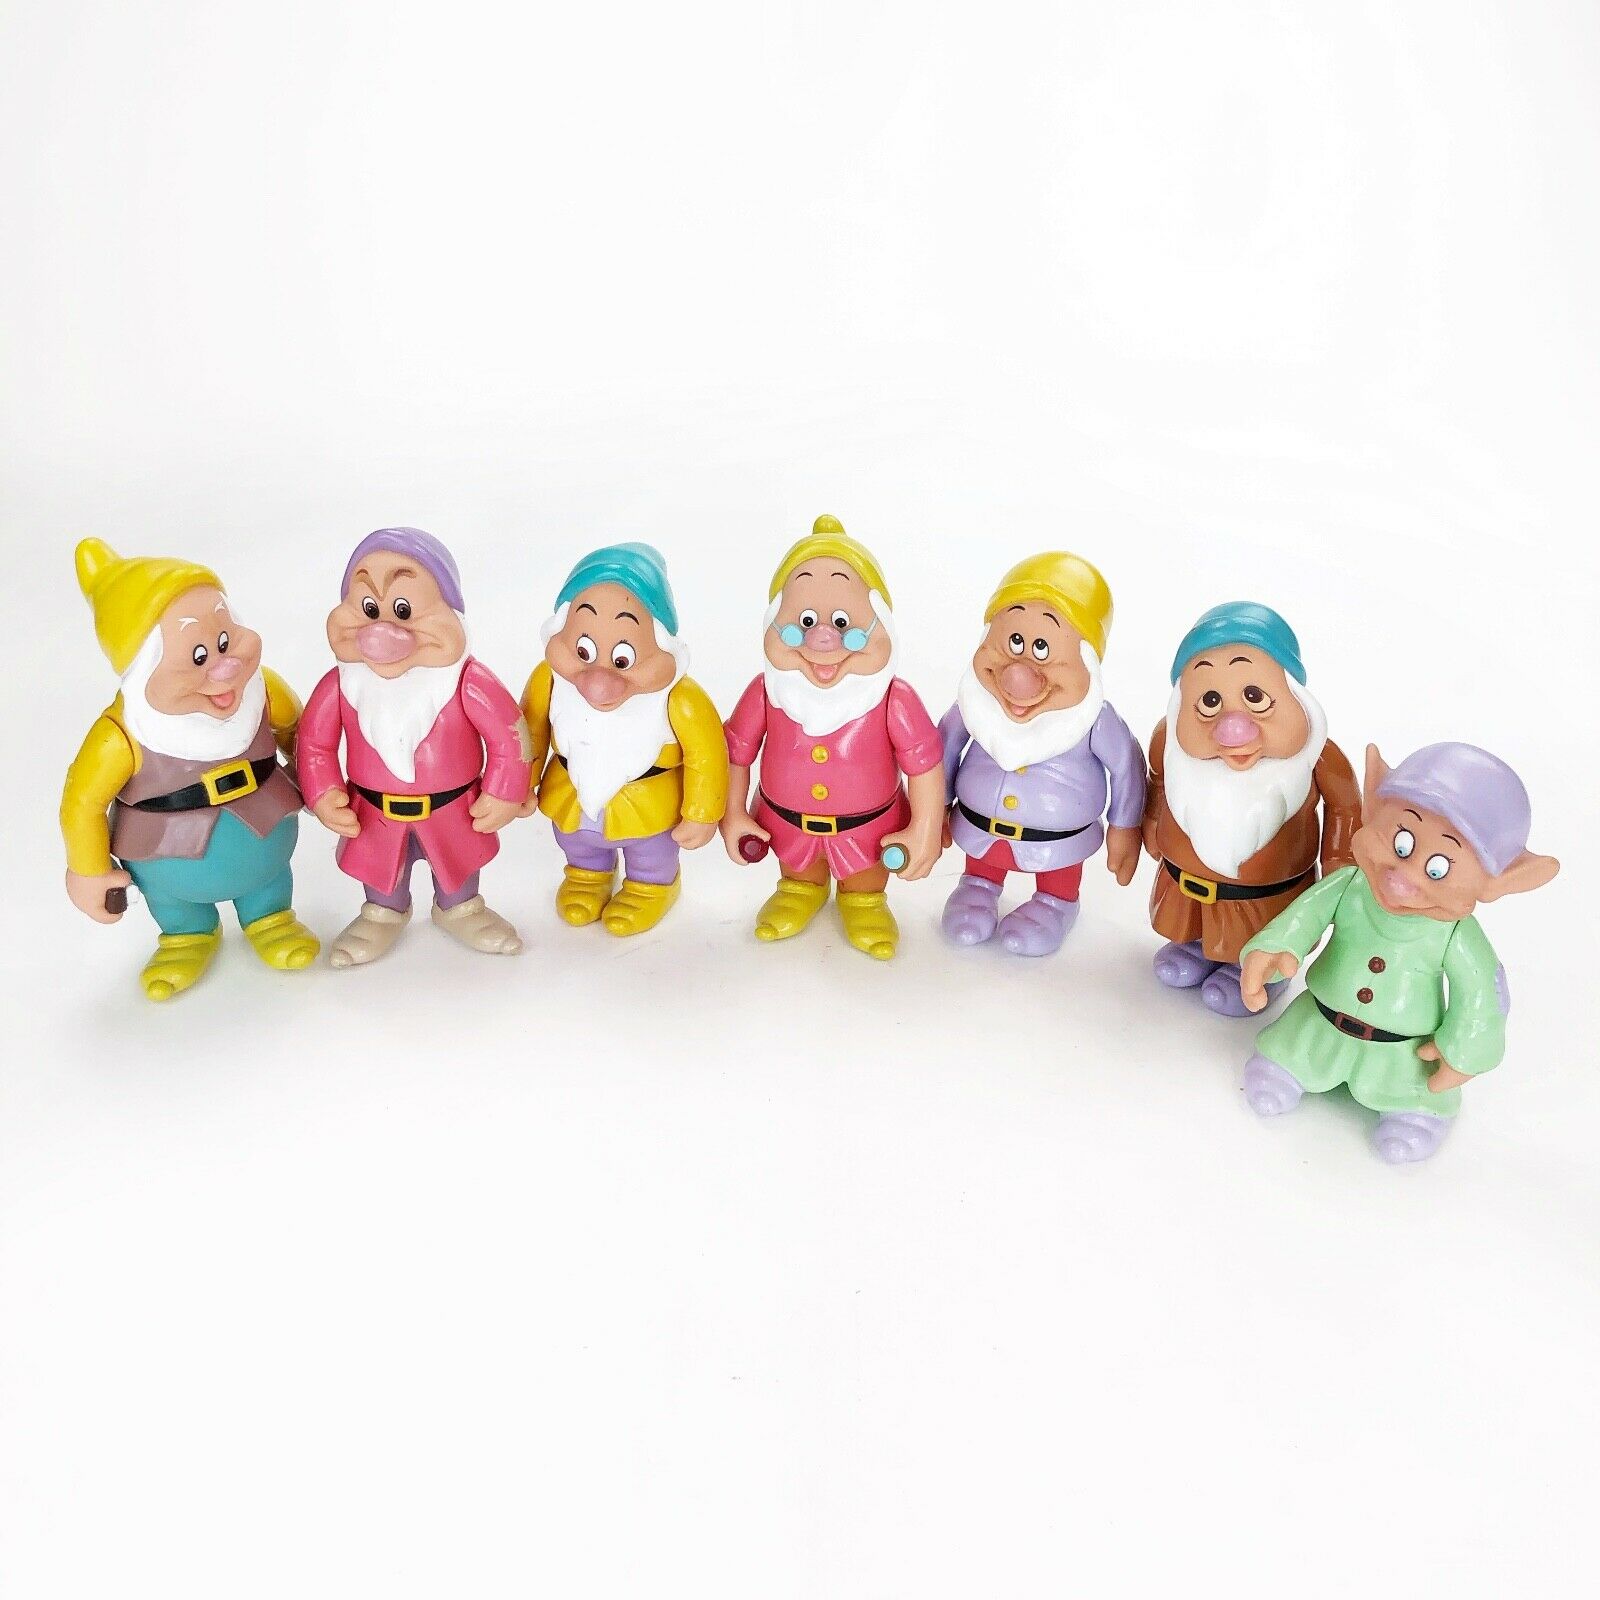 Rare Vintage Disney Snow White's Seven Dwarfs 6 Inch Vinyl Figures Set Of 7